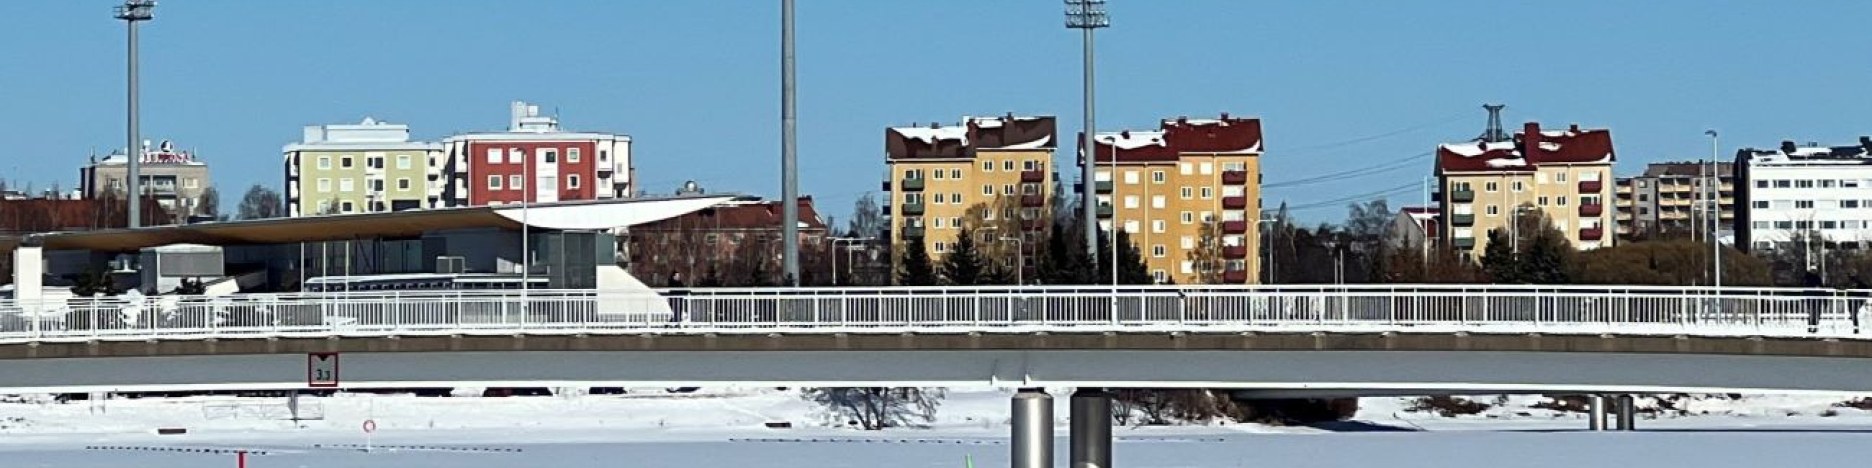 Pikisaaren silta Tuirassa.